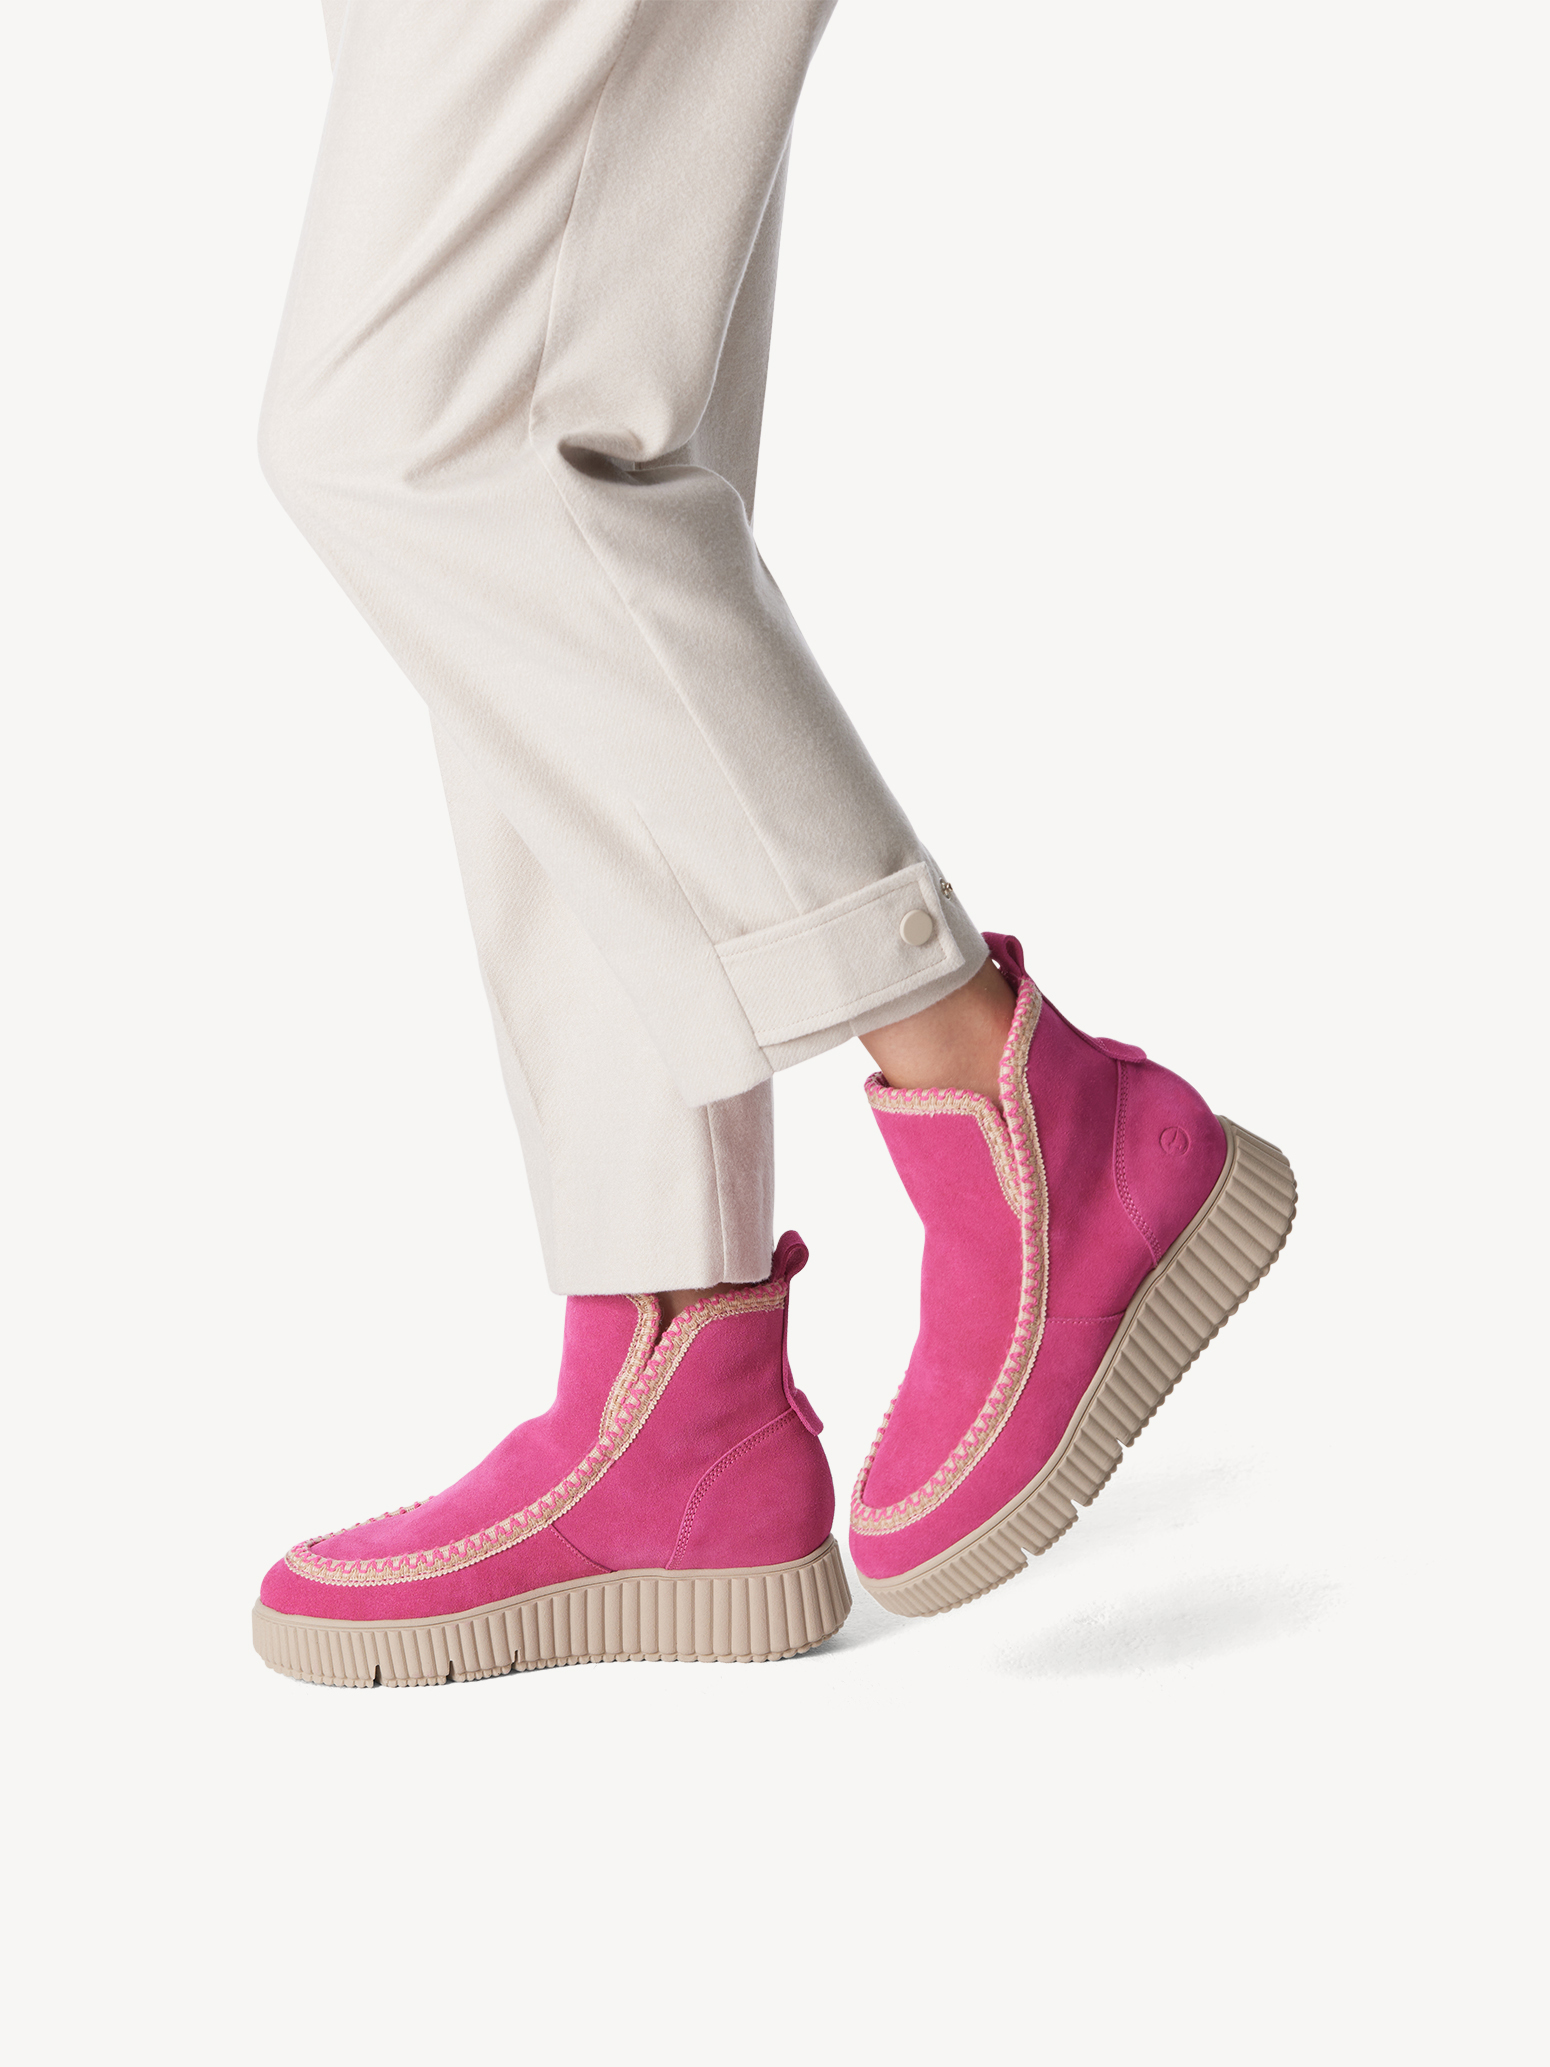 Lederstiefelette - pink Warmfutter 1-26865-41-513: Tamaris Stiefeletten &  Boots online kaufen!